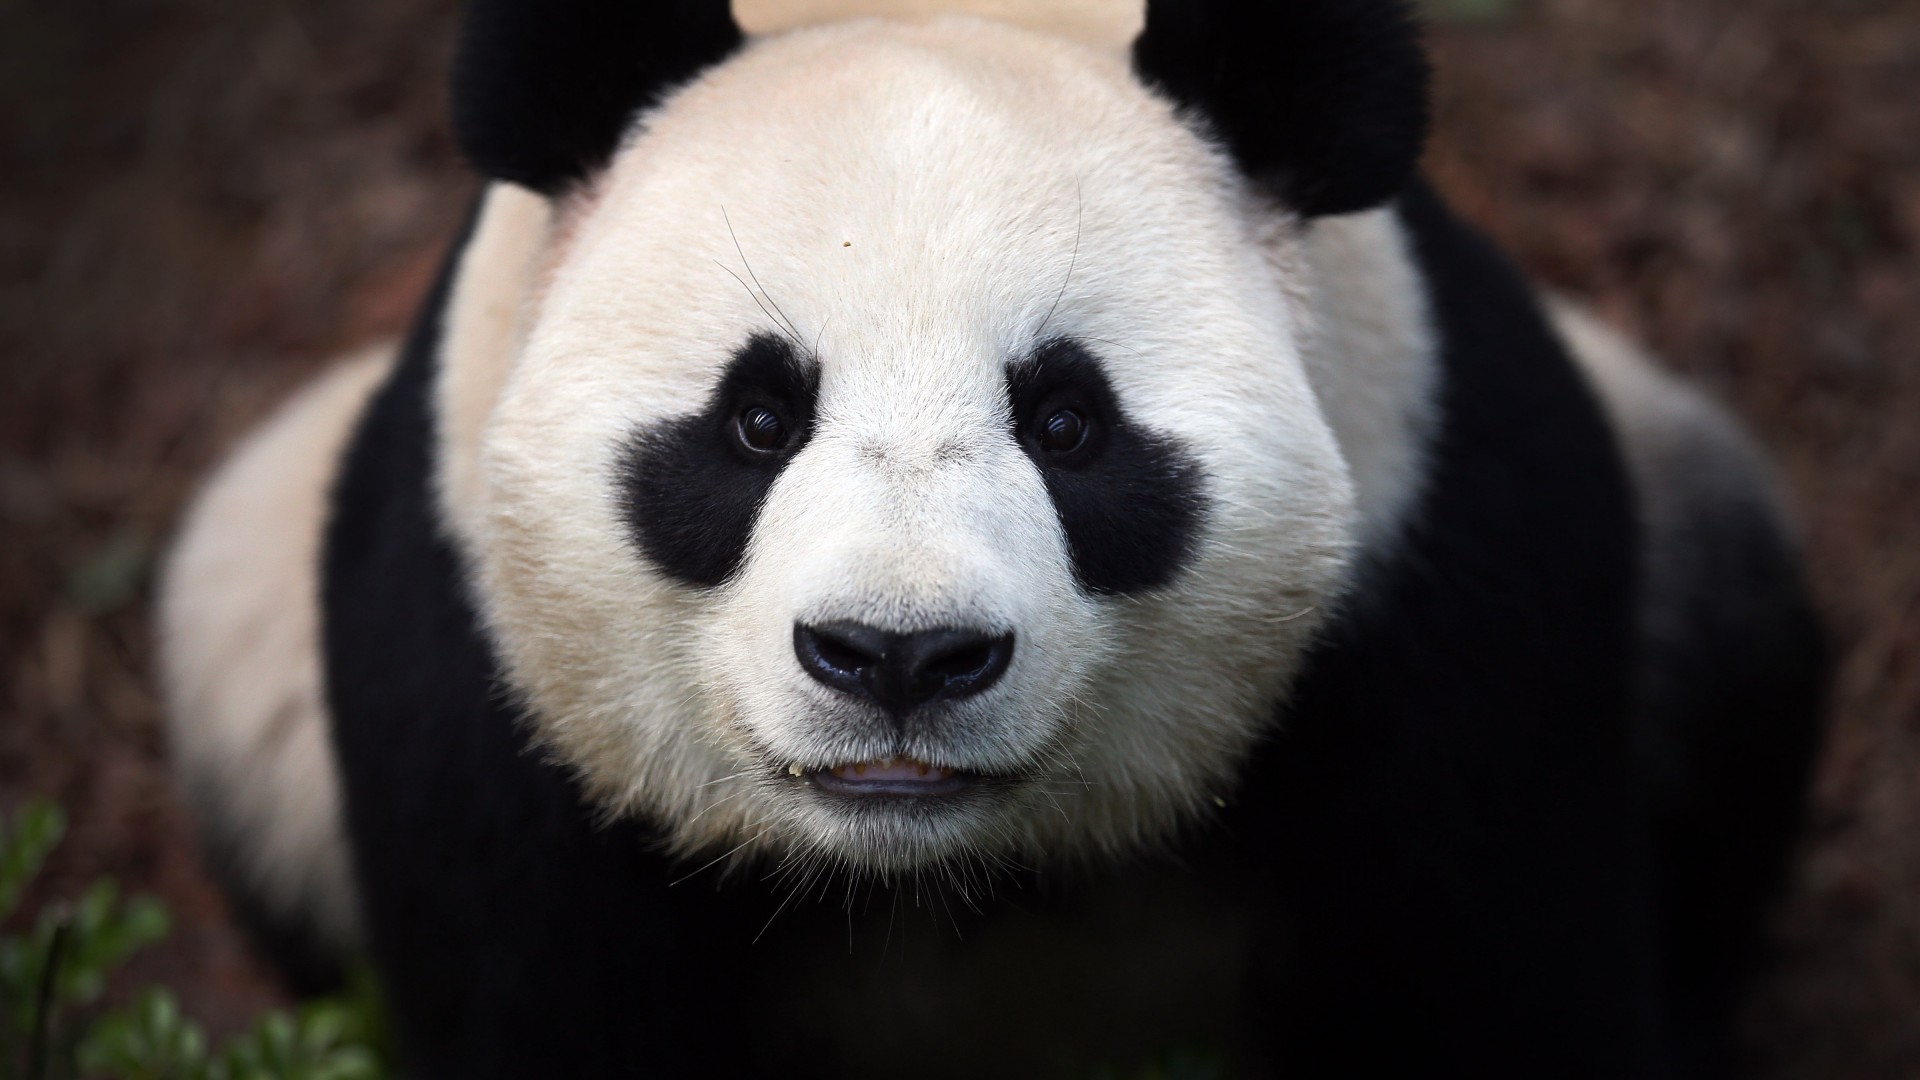 китайская панда, китай, животное, зоопарк, черная, белая, глаза, природа, Сhina panda, bears, China, animal, zoo, black, white, eyes, wild, nature (horizontal)